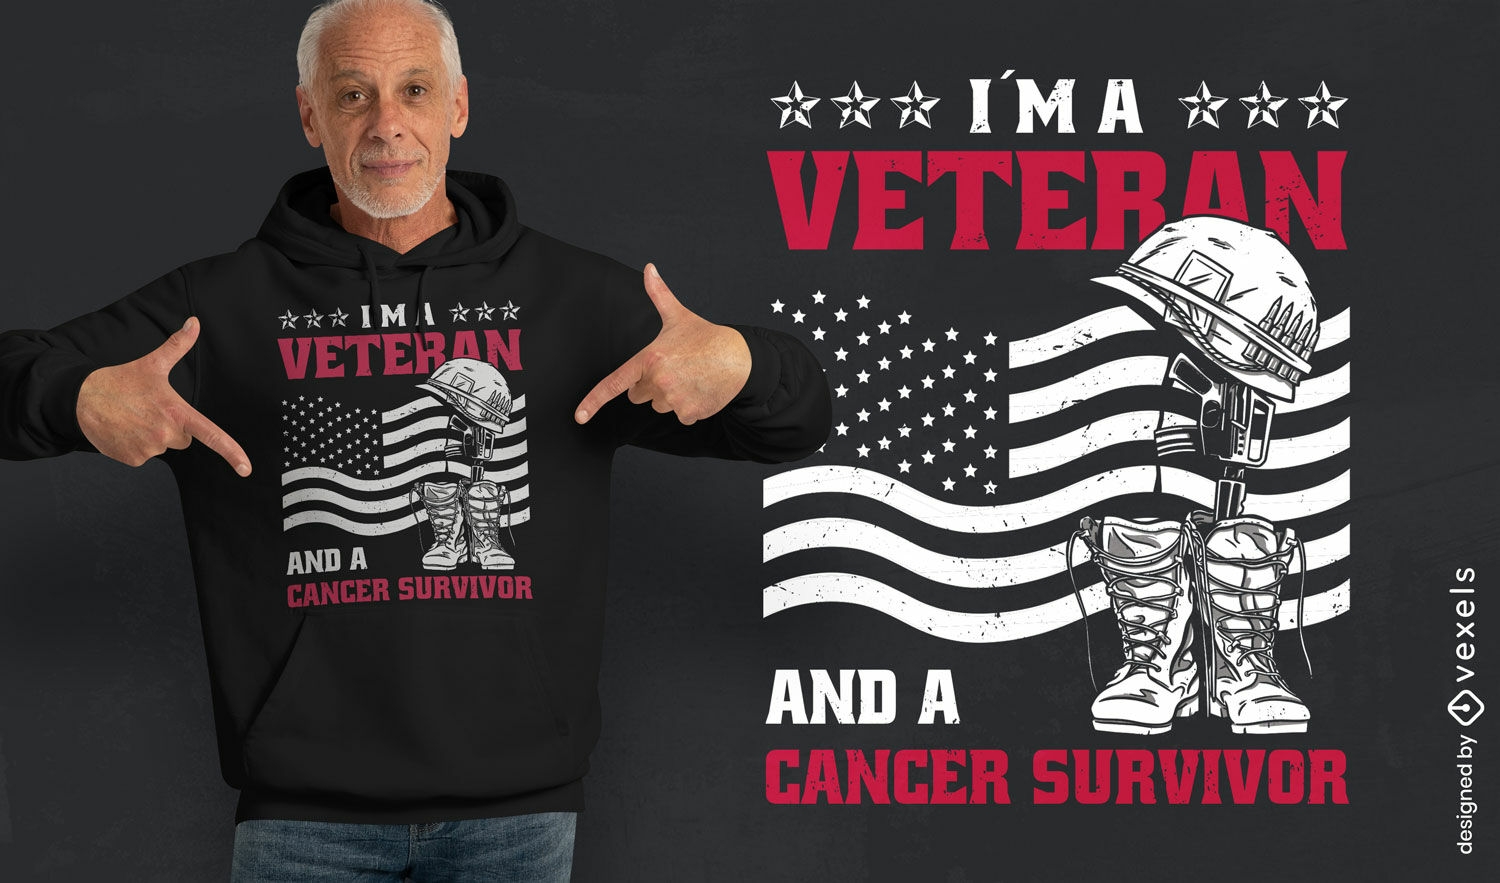 Veteran and cancer survivor t-shirt design